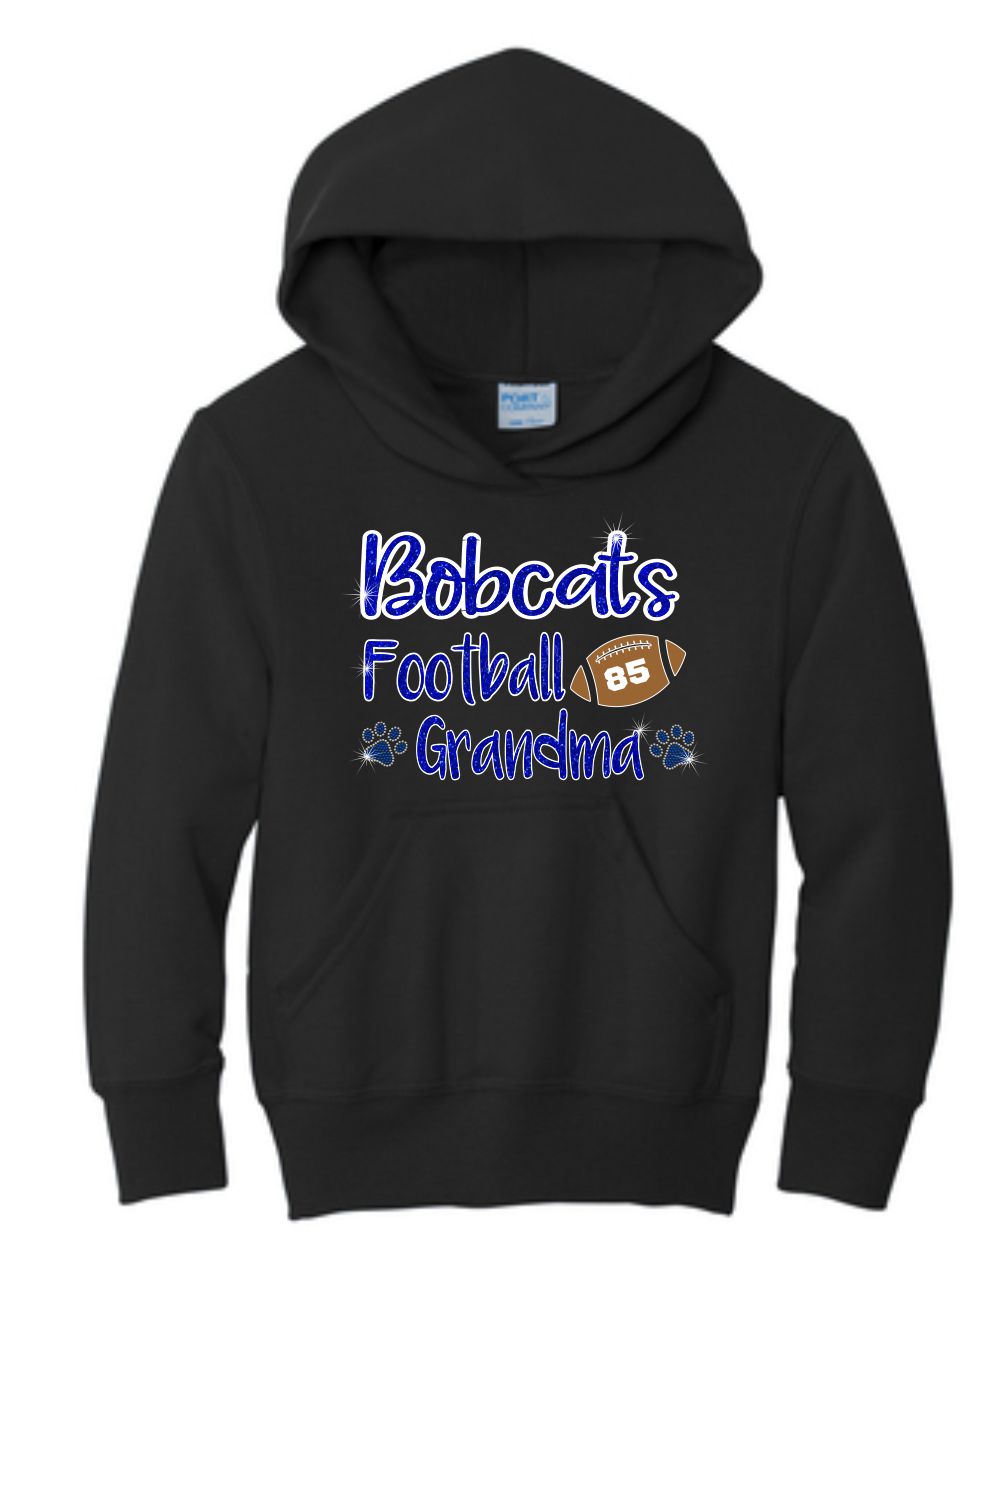 Bobcat Football Grandma Hooded Sweatshirt